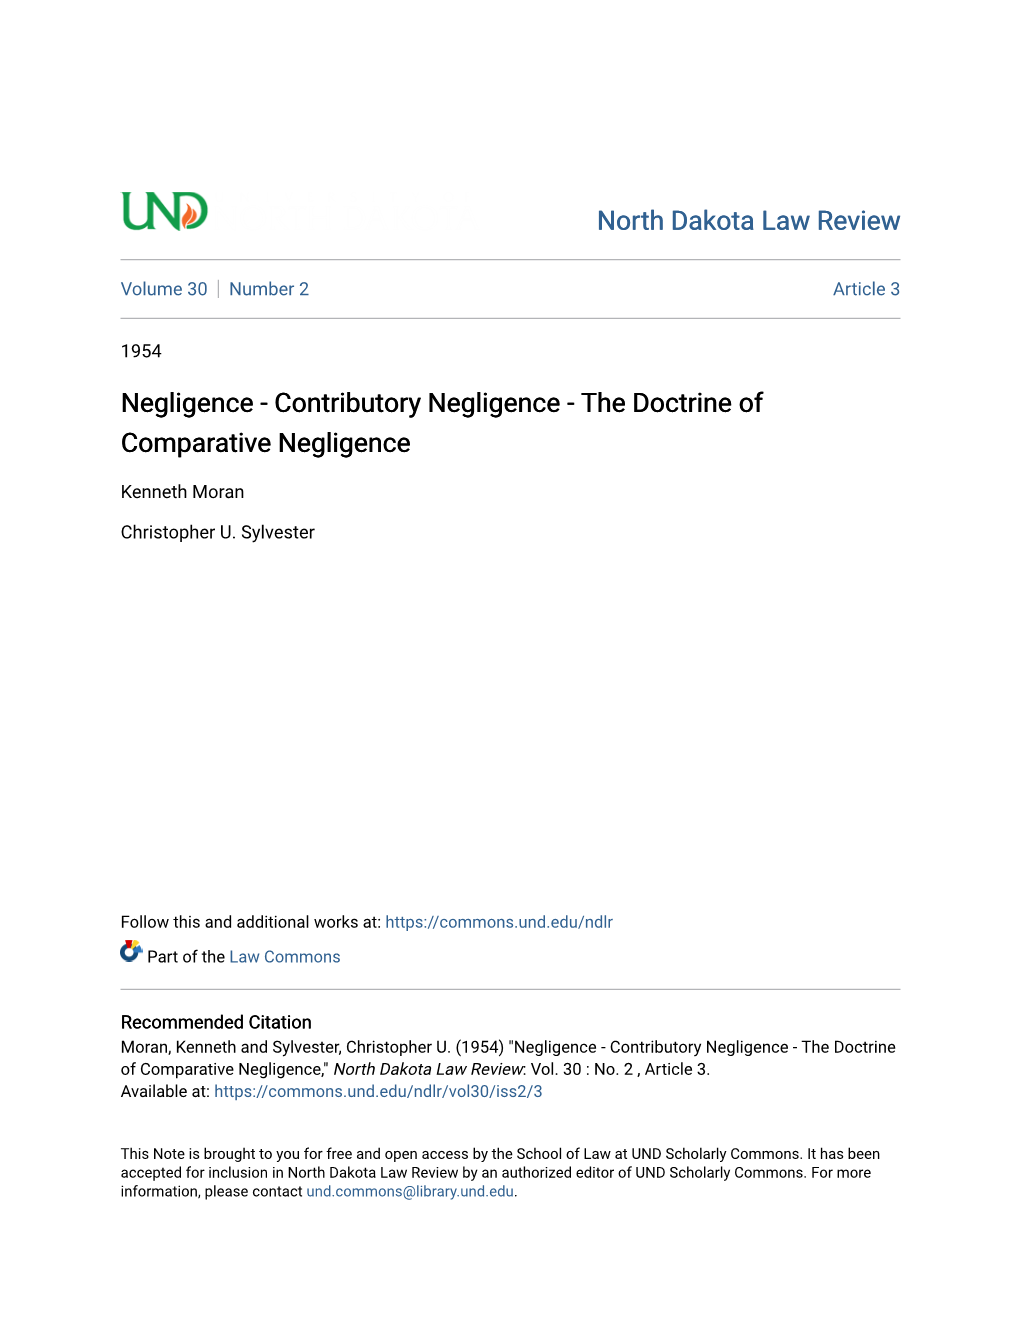 Negligence - Contributory Negligence - the Doctrine of Comparative Negligence